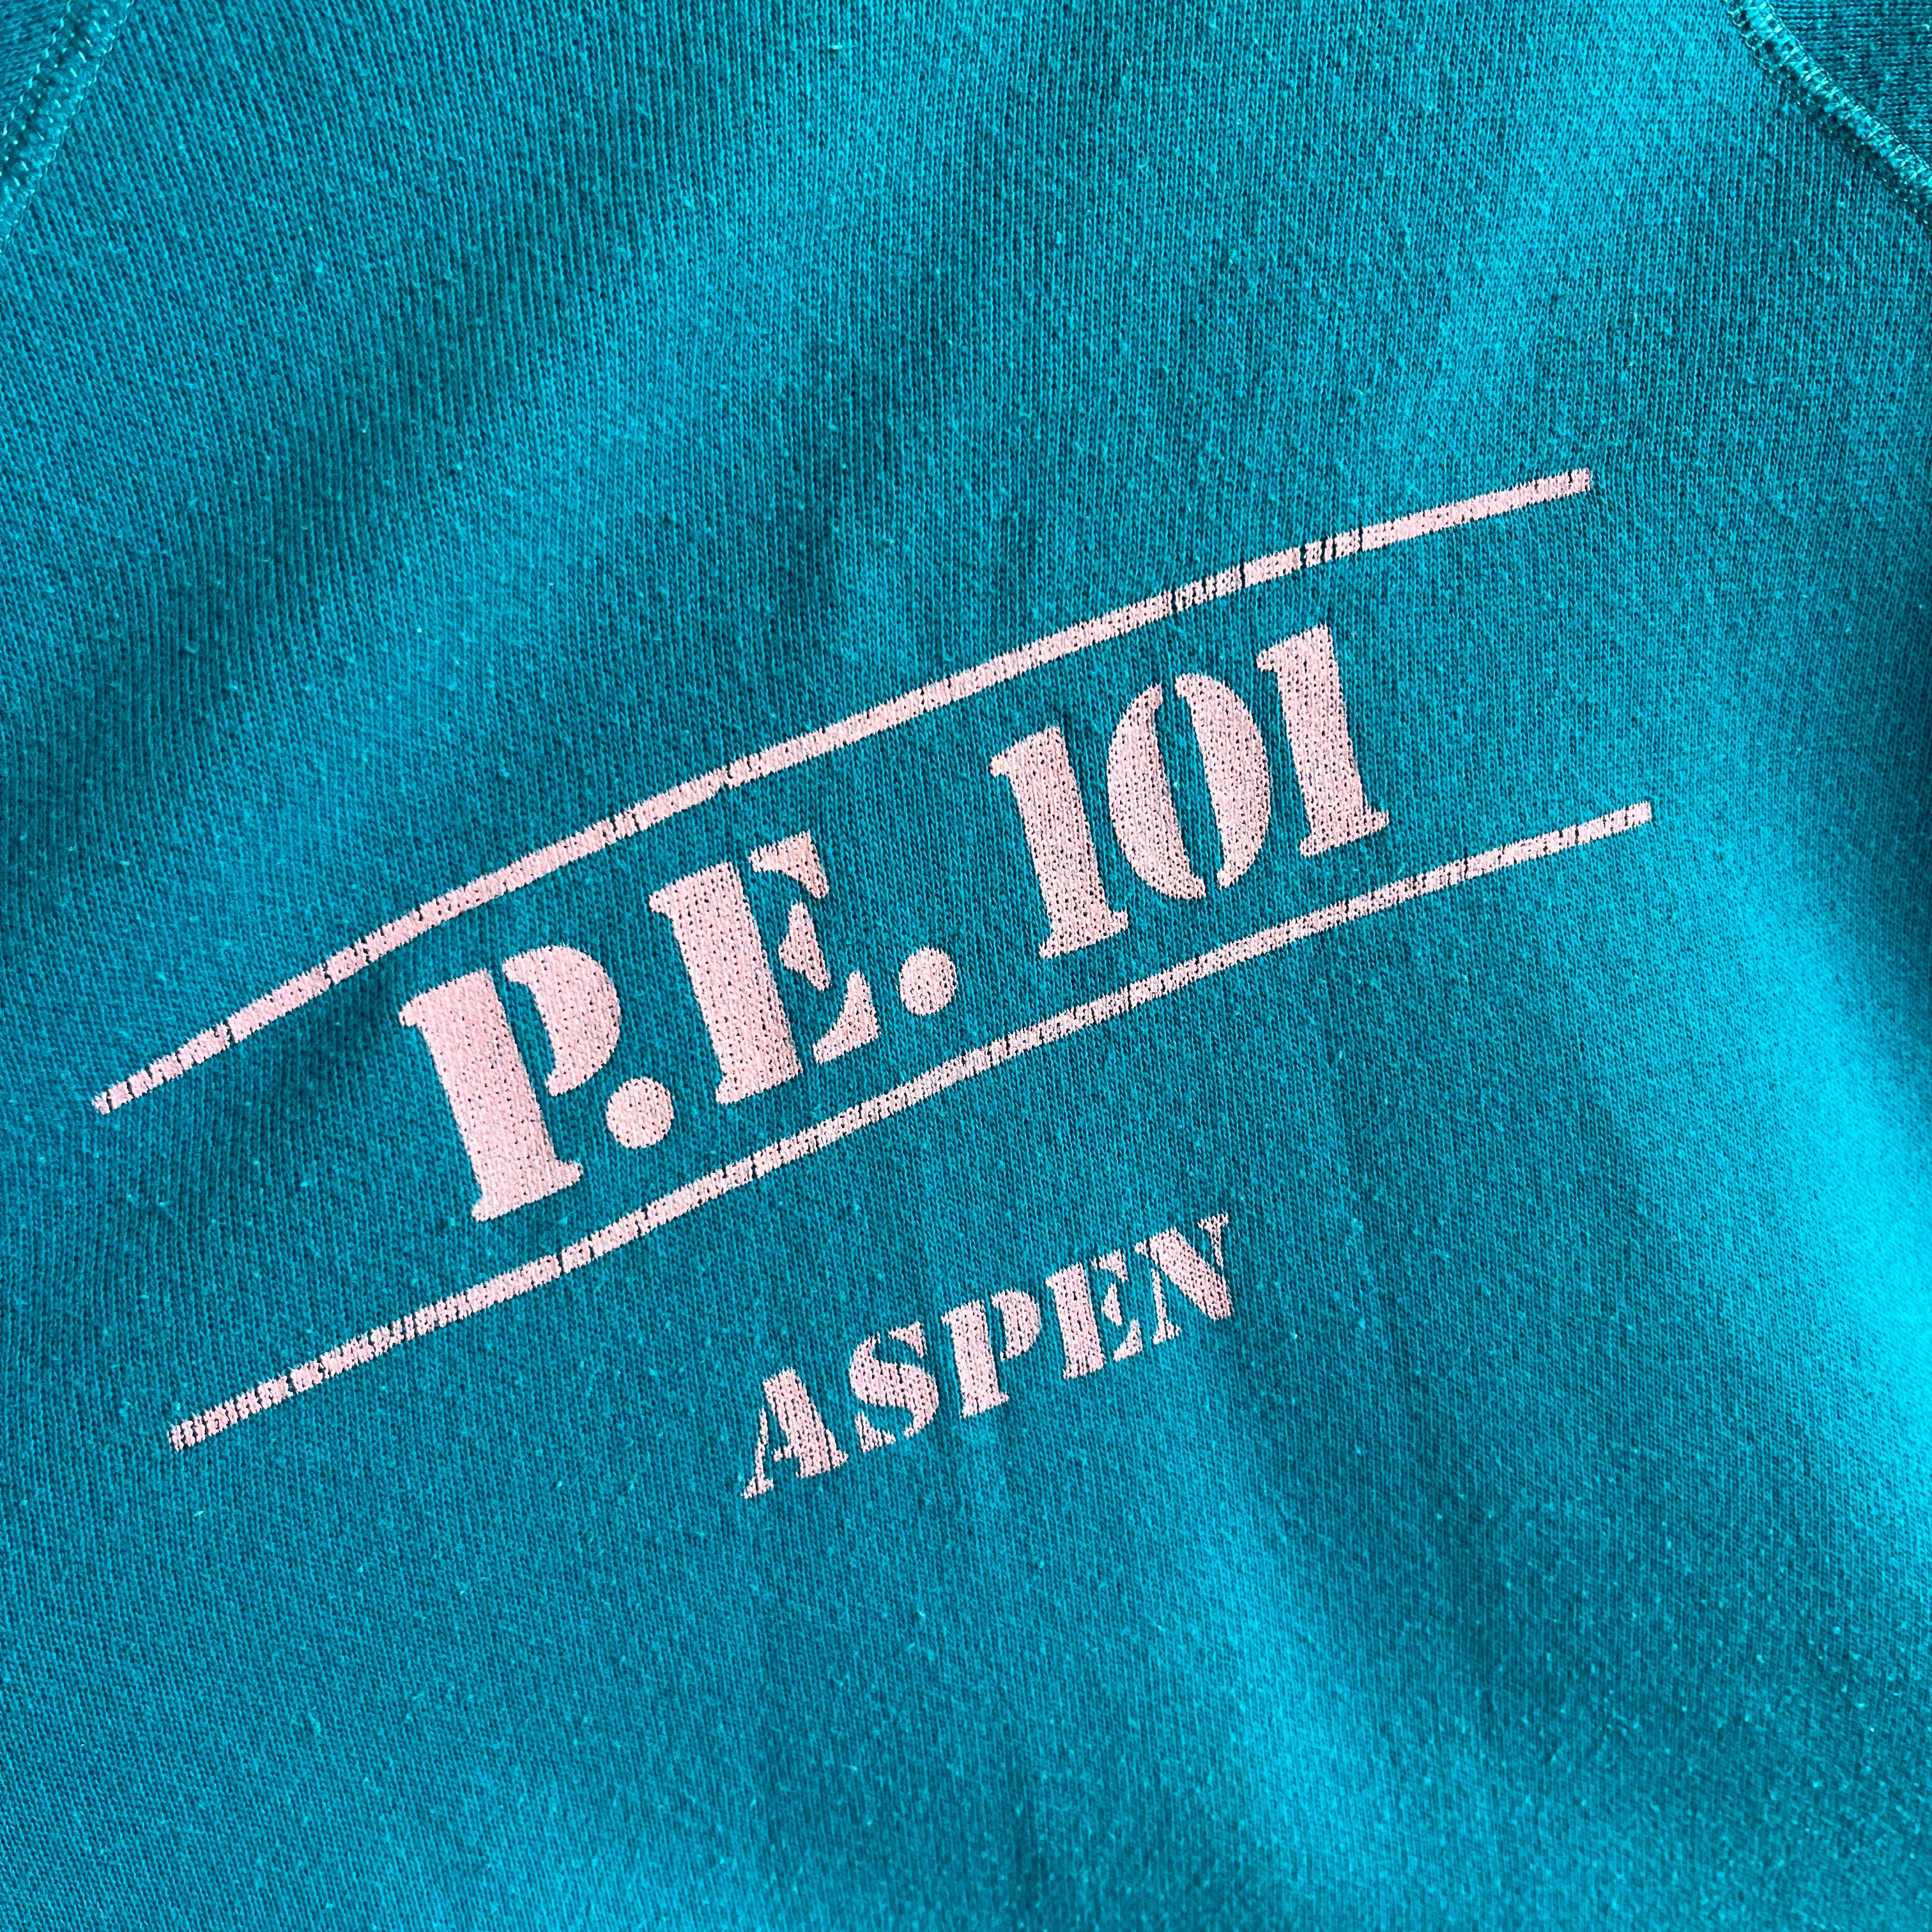 1980s P.E. 101 - Aspen Sweatshirt - Oh My!